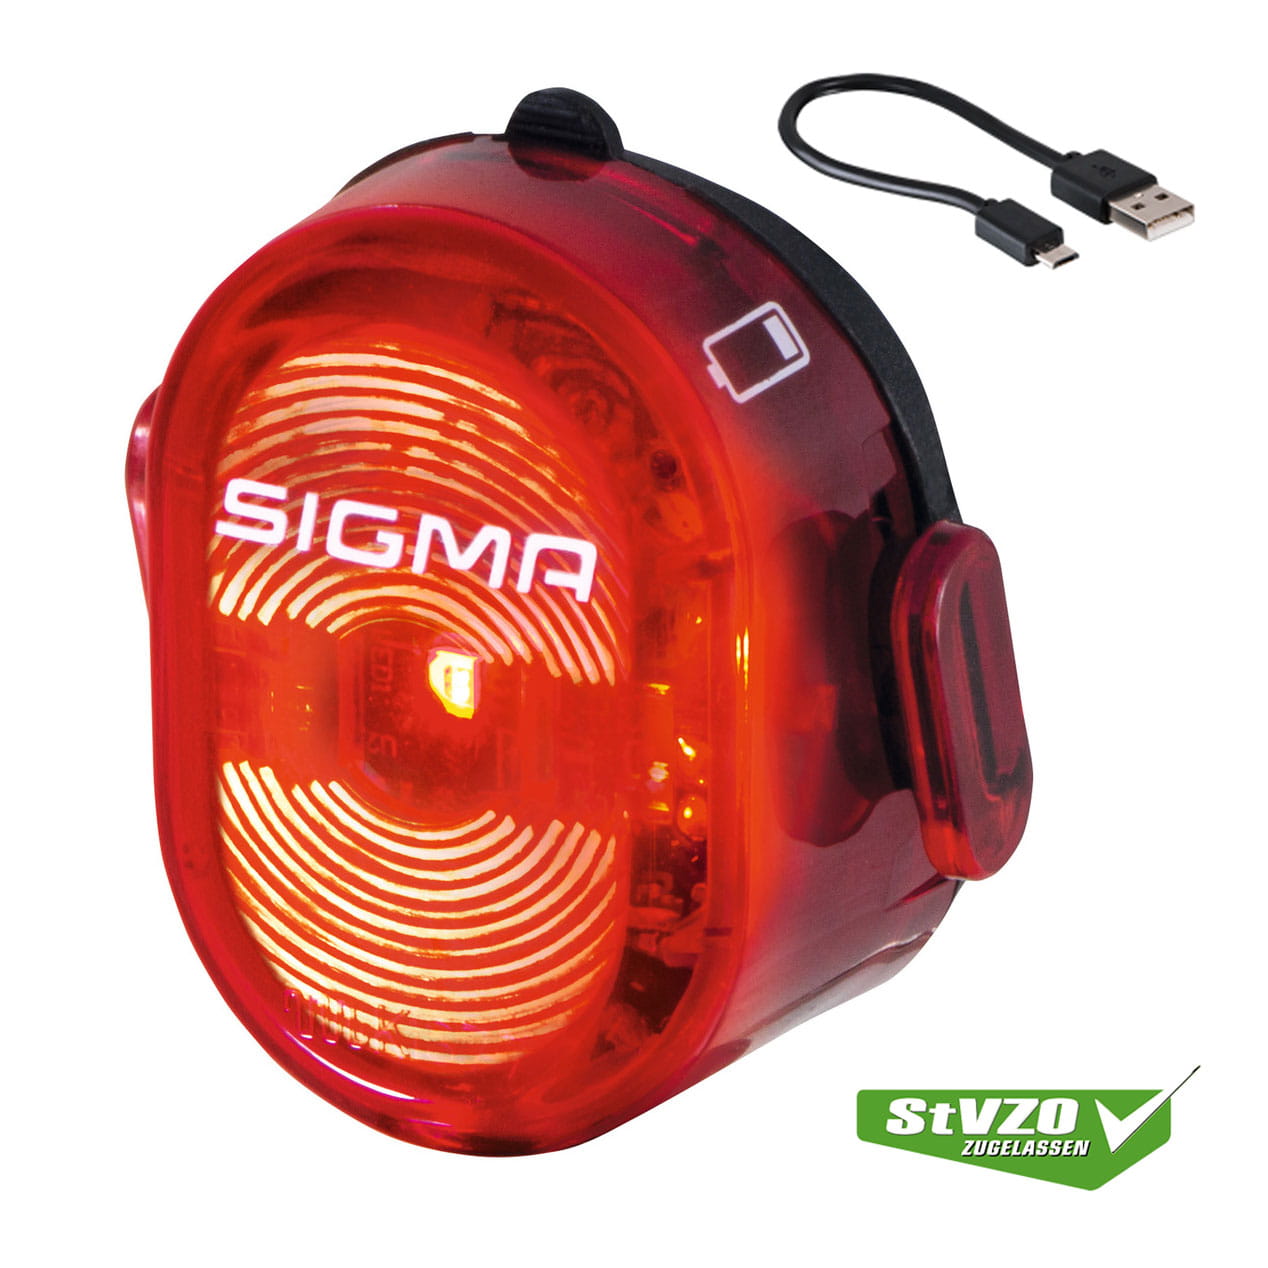 Sigma Nugget II LED Bike Rear Light with USB